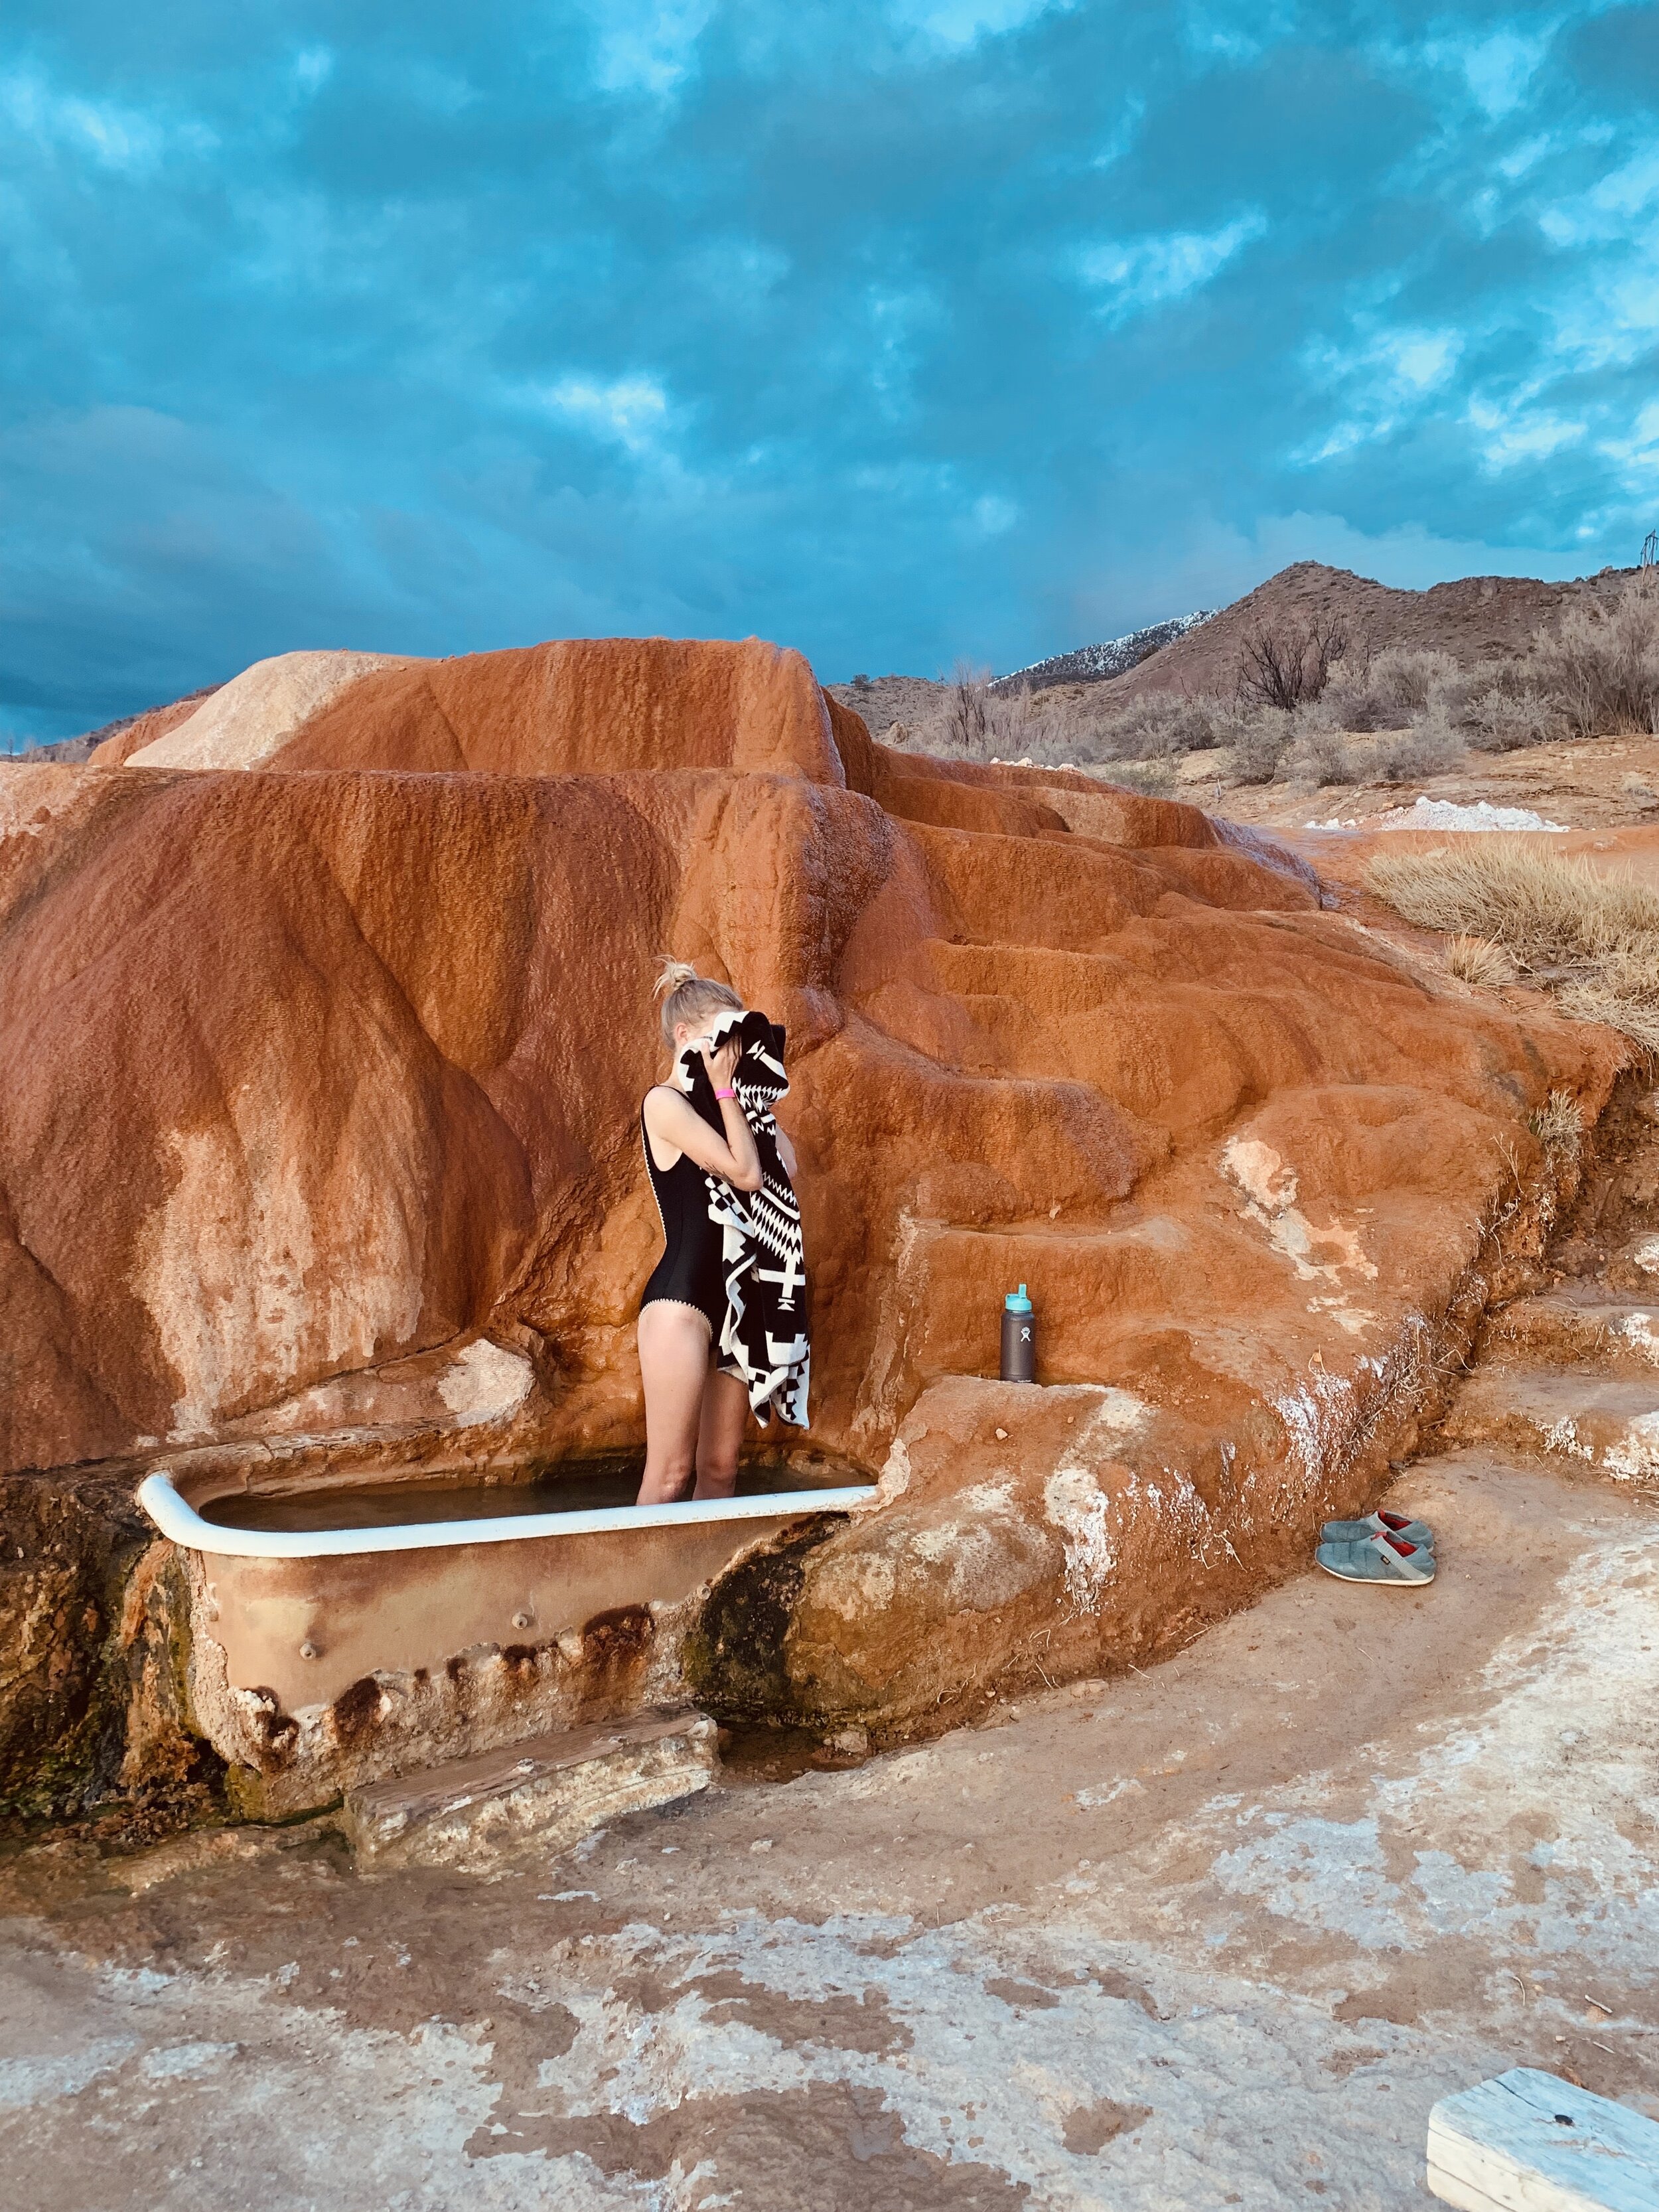 The Hearnes are Wedding Photographers in Moab, Utah | Desert Adventure Elopements